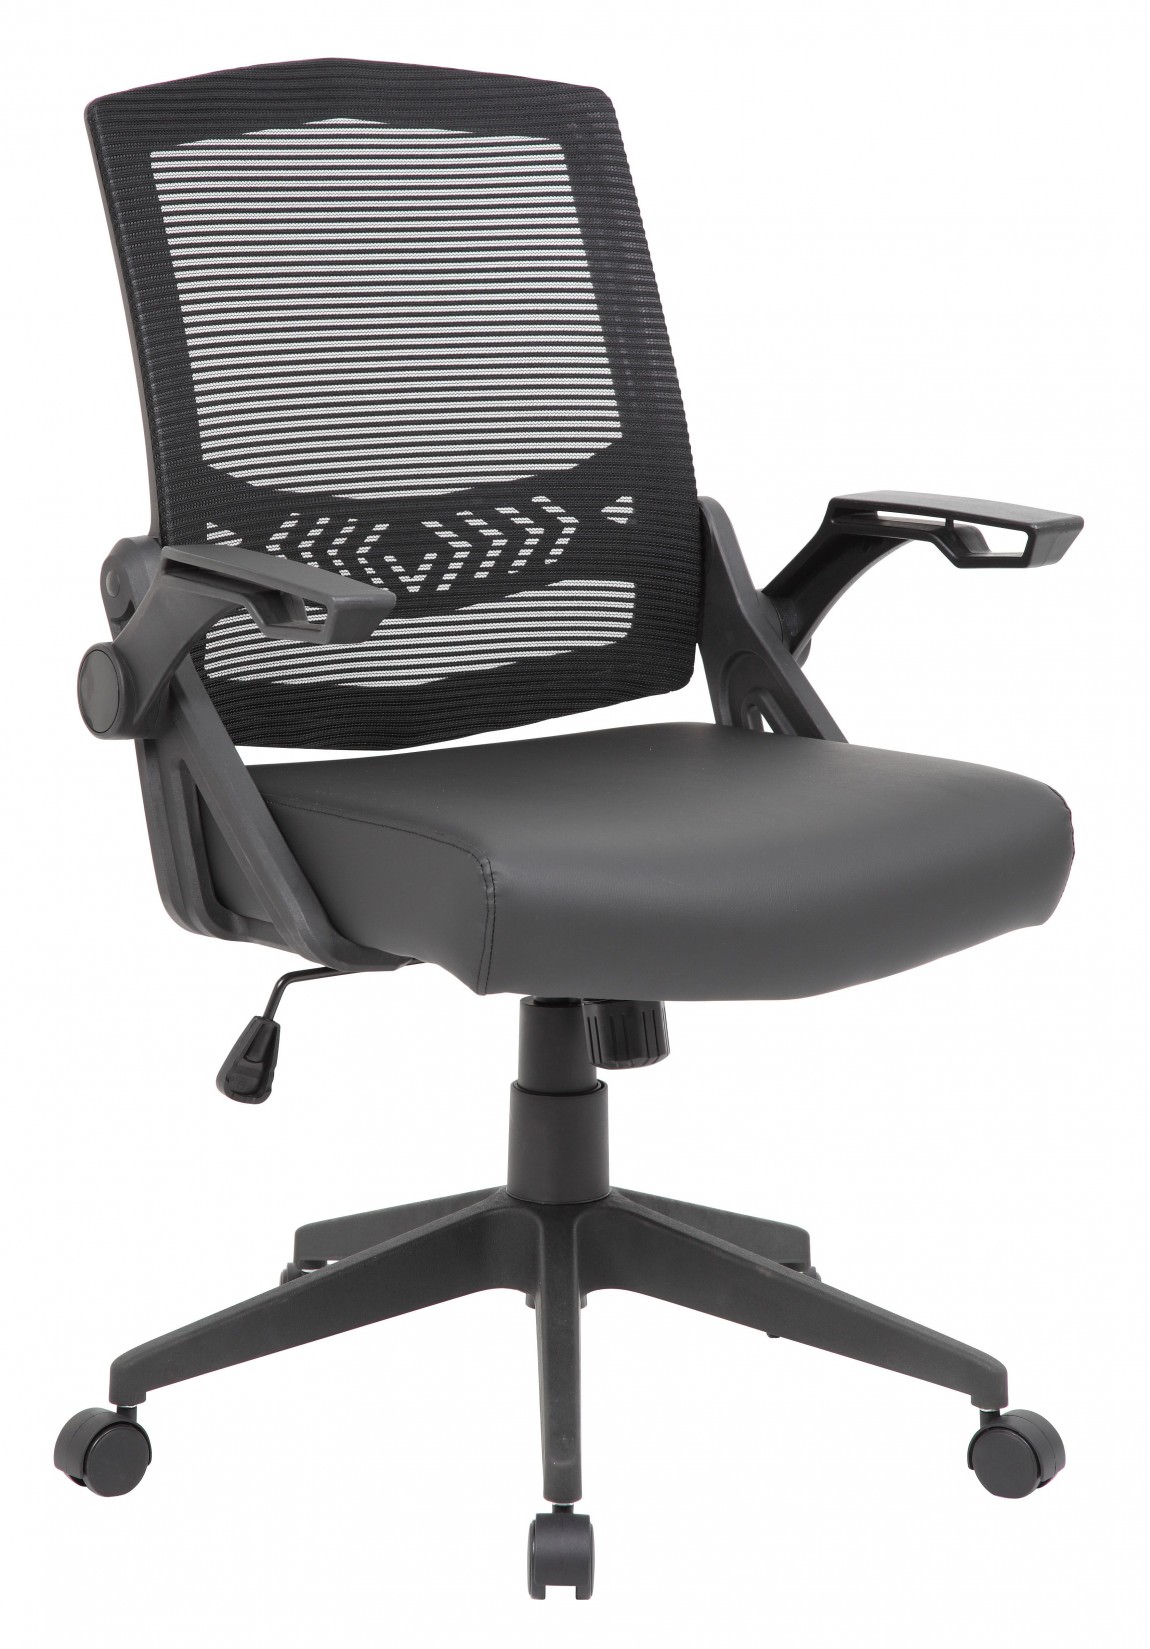 https://madisonliquidators.com/images/p/1150/19177-office-chair-with-flip-up-arms-1.jpg